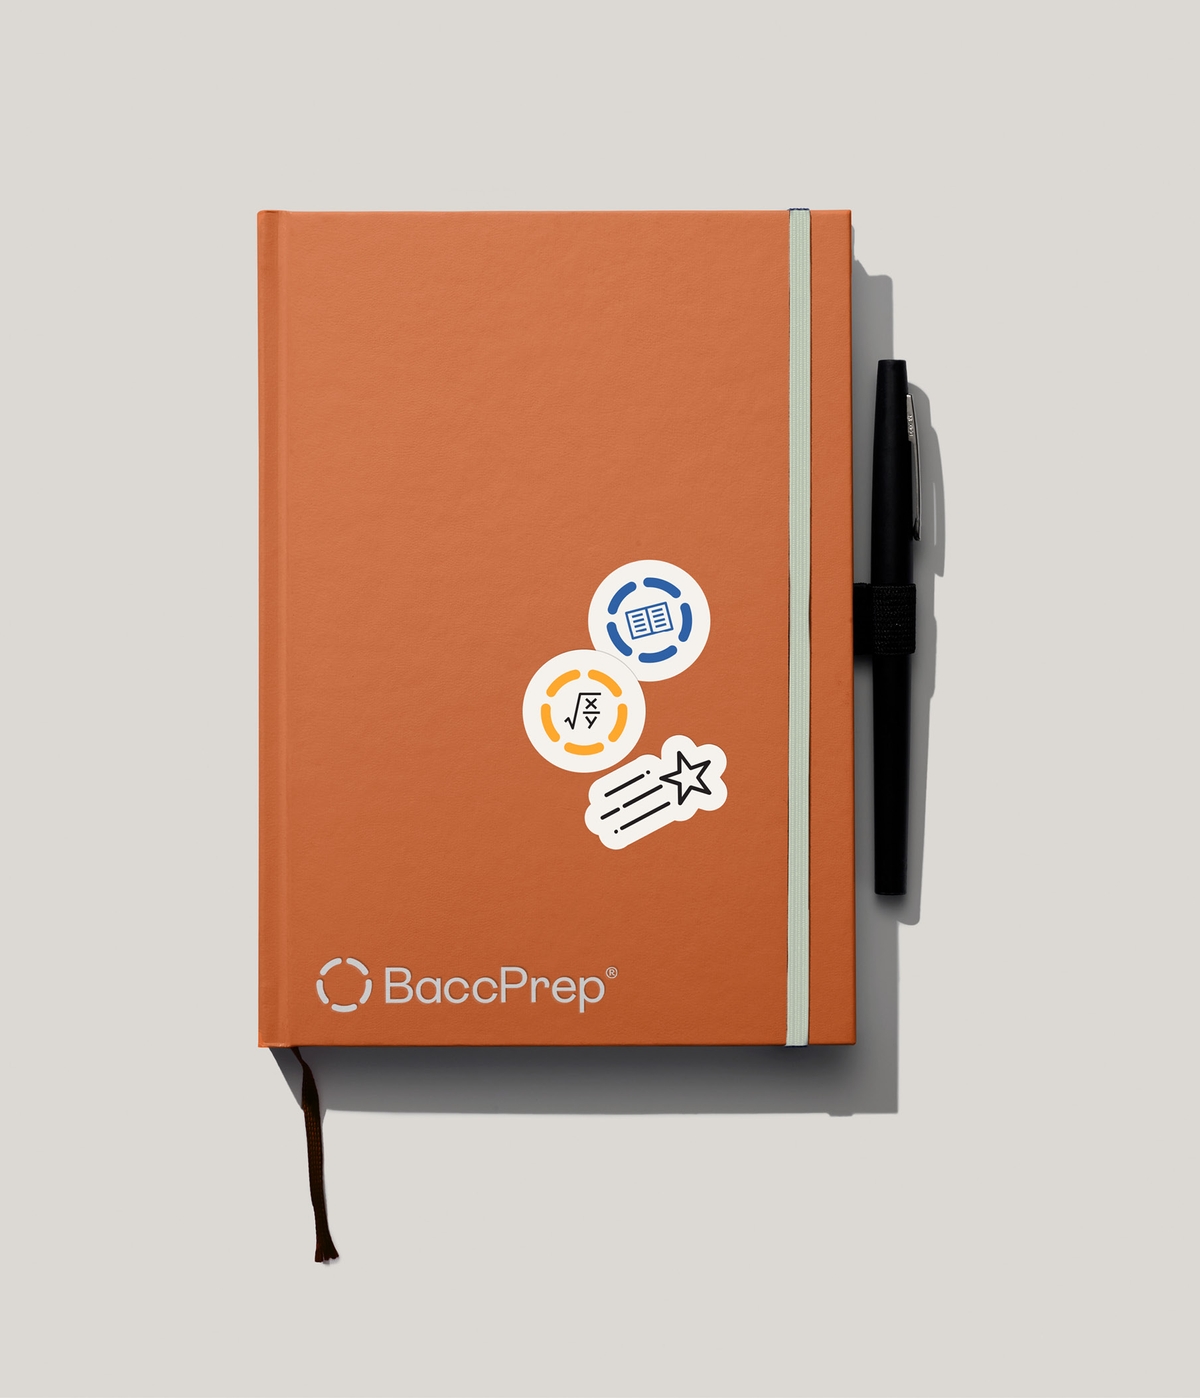 Baccprep Branding - IB Education Orange Notebook Stickers and Logo | Atollon - a design company